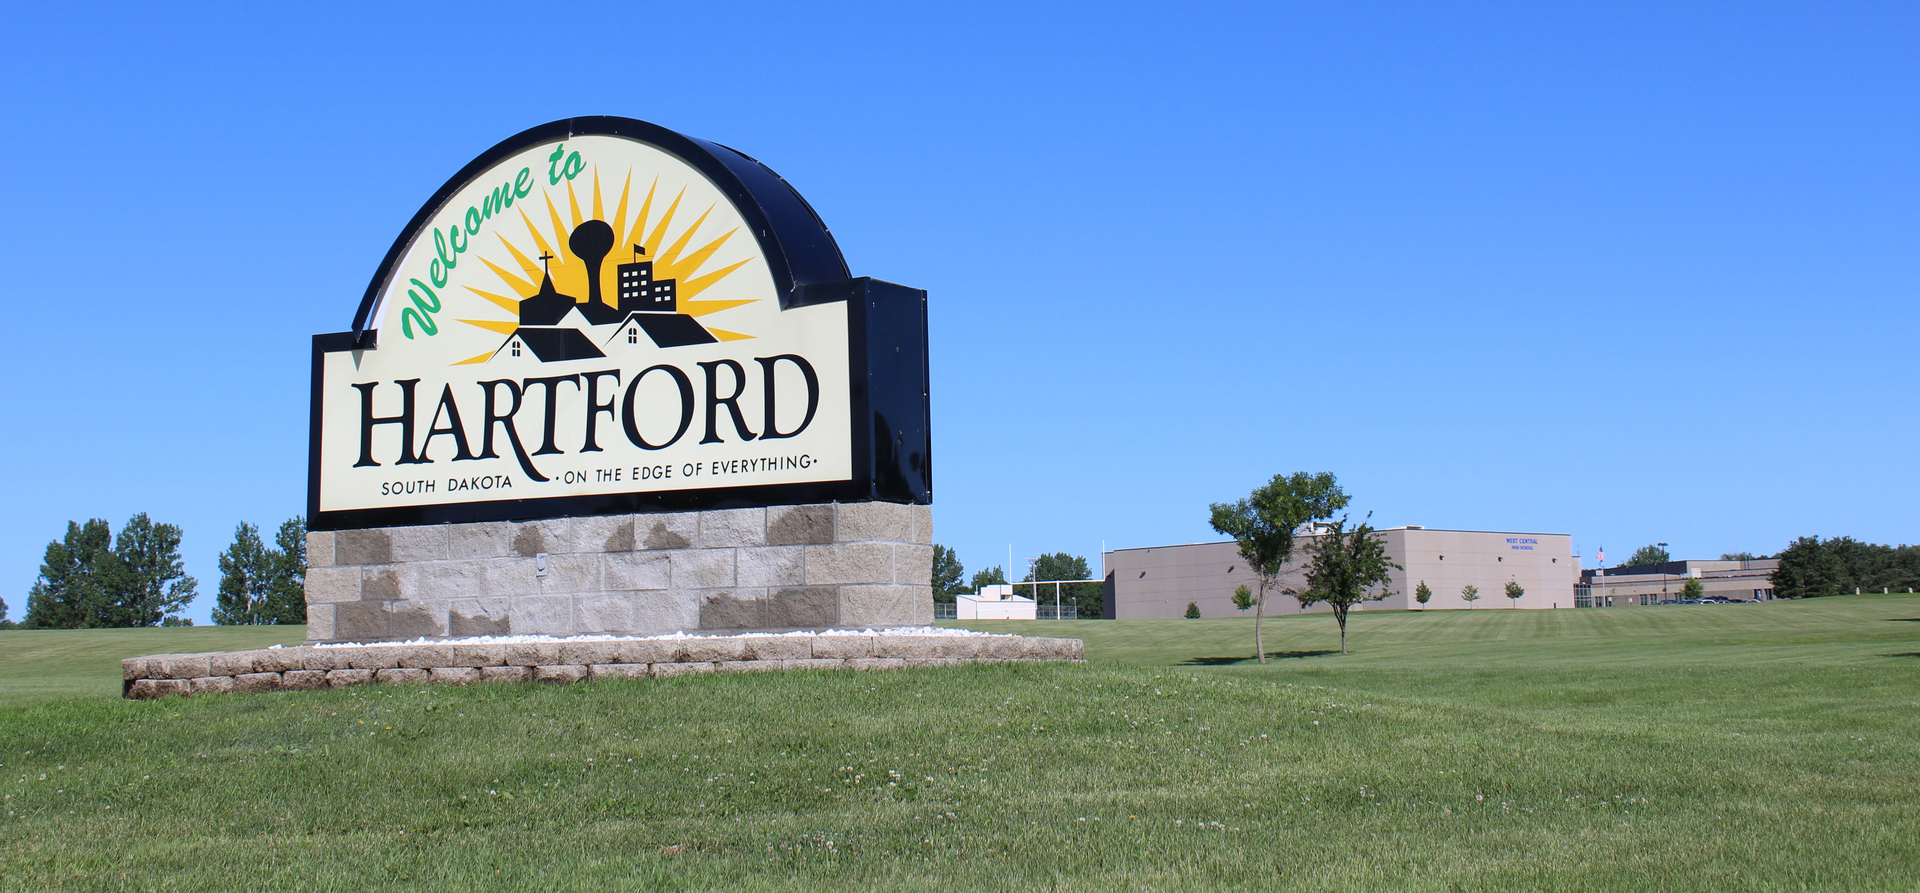 Why You Should Make Hartford Home